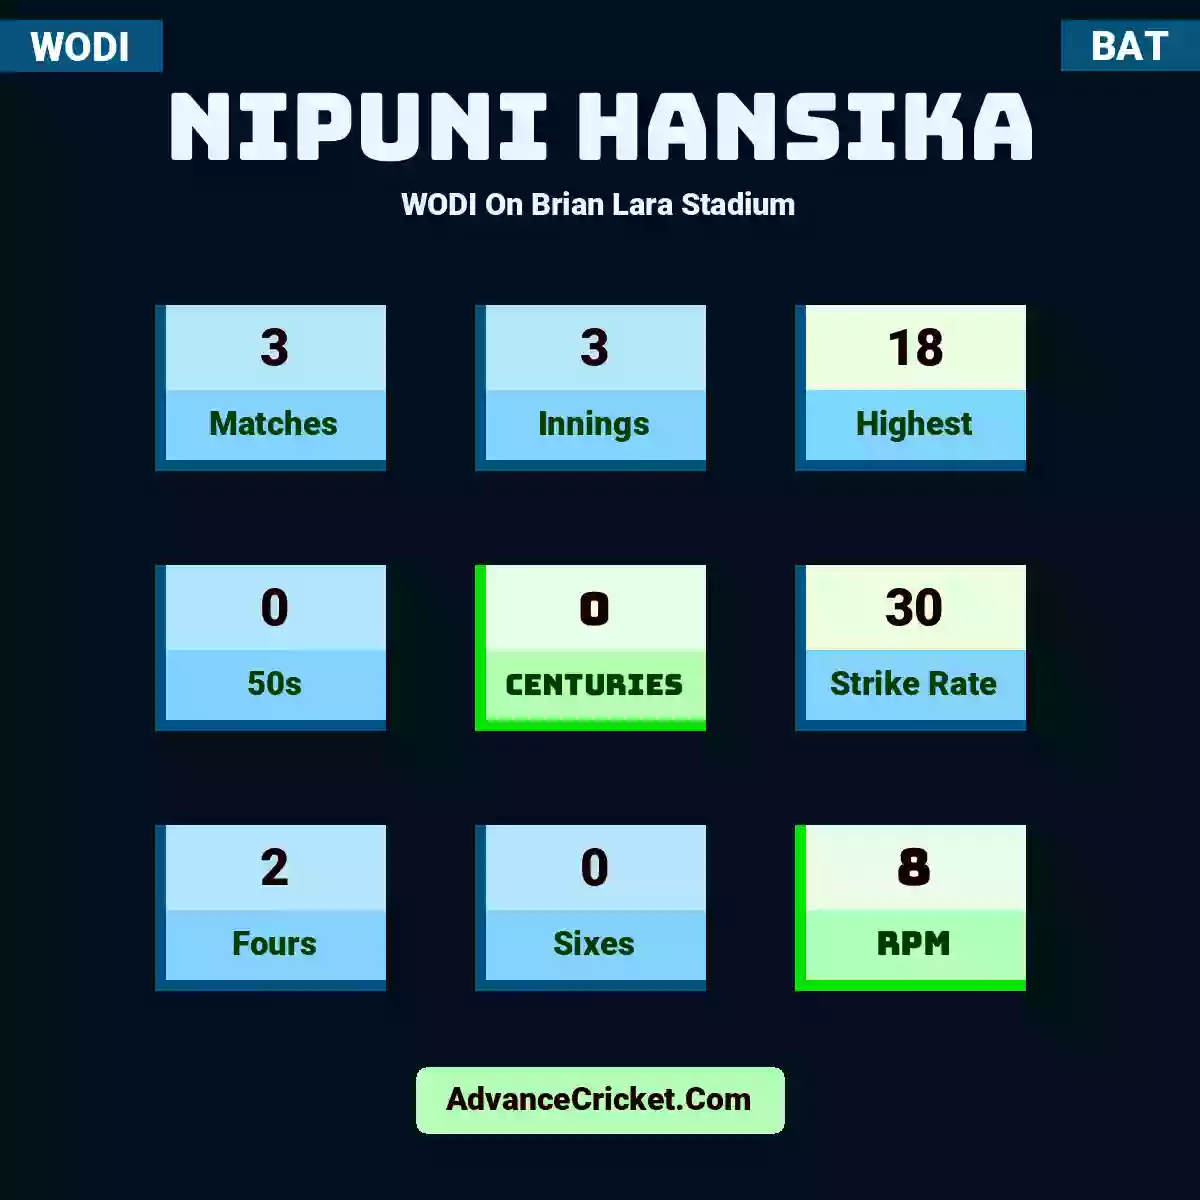 Nipuni Hansika WODI  On Brian Lara Stadium, Nipuni Hansika played 3 matches, scored 18 runs as highest, 0 half-centuries, and 0 centuries, with a strike rate of 30. N.Hansika hit 2 fours and 0 sixes, with an RPM of 8.